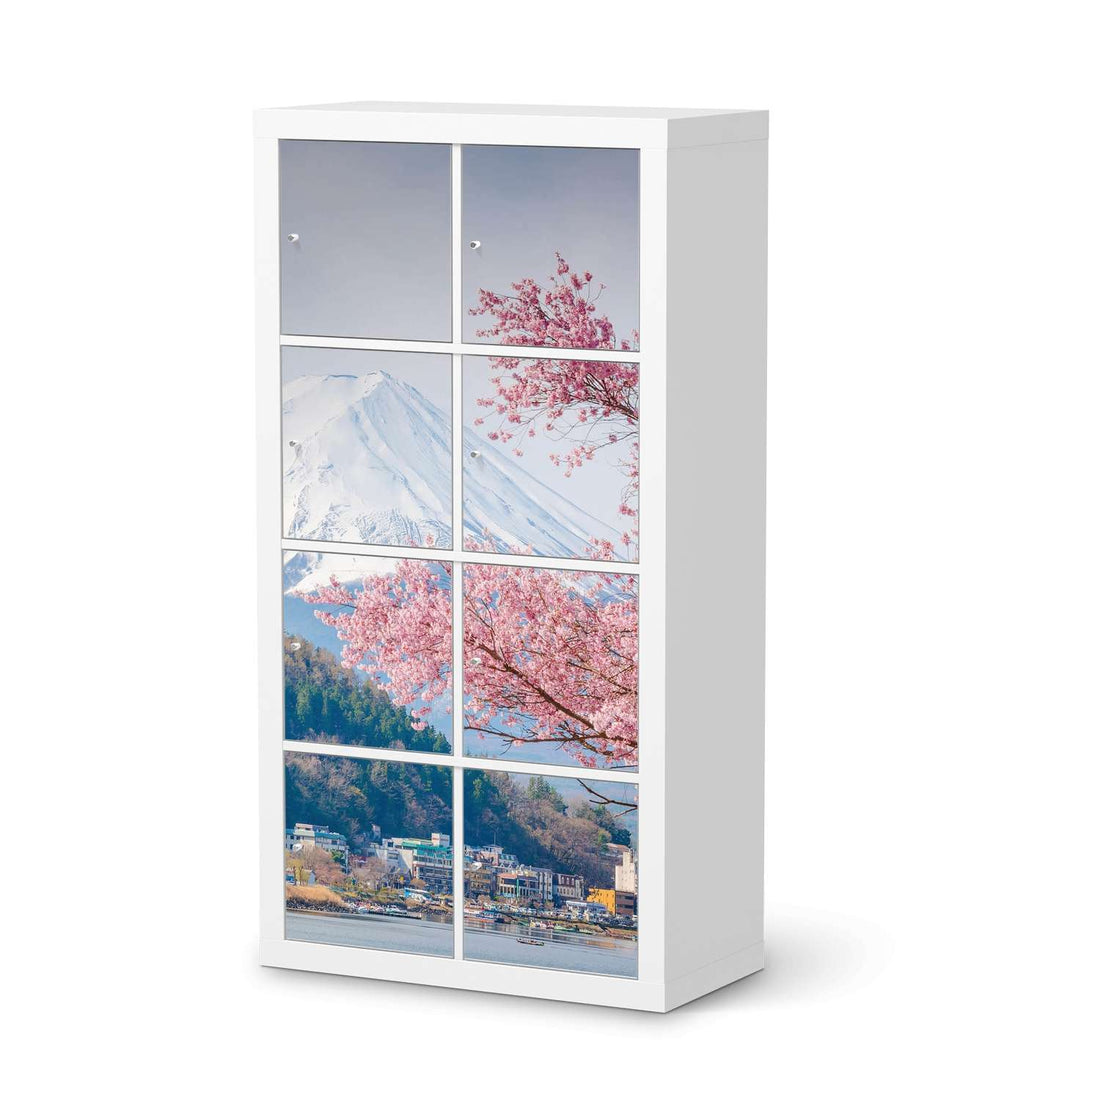 Folie für Möbel Mount Fuji - IKEA Kallax Regal 8 Türen  - weiss